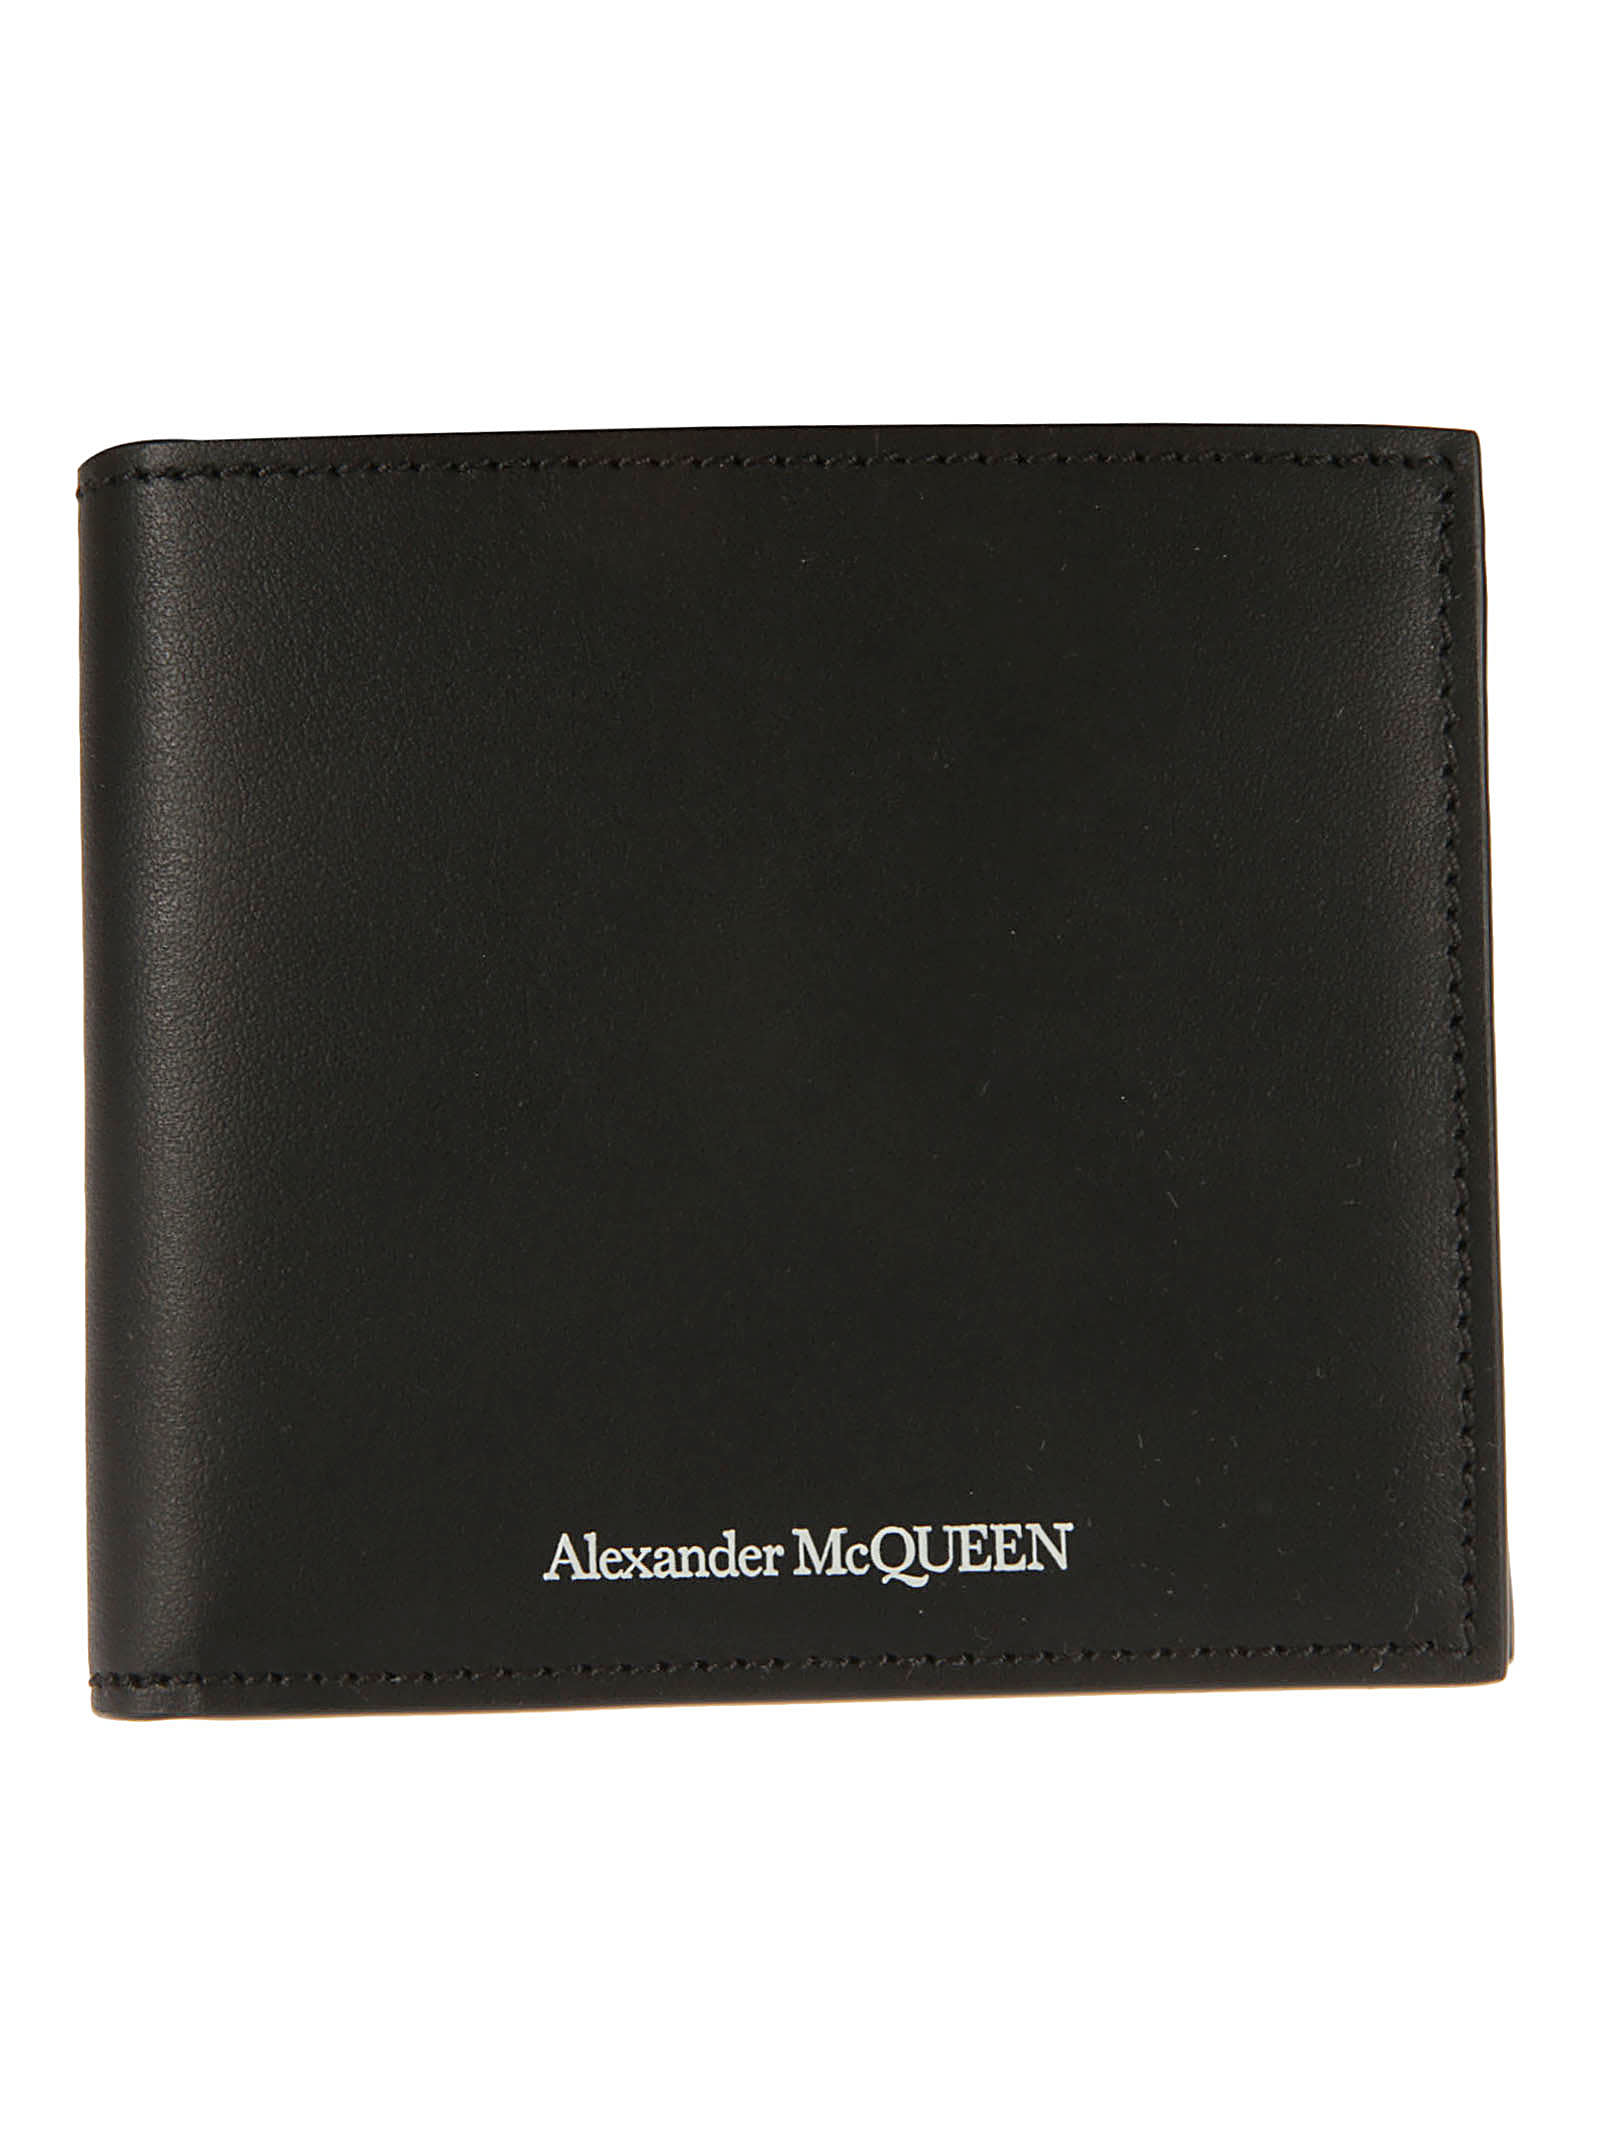 Alexander McQueen 4cc Slot Billfold Wallet